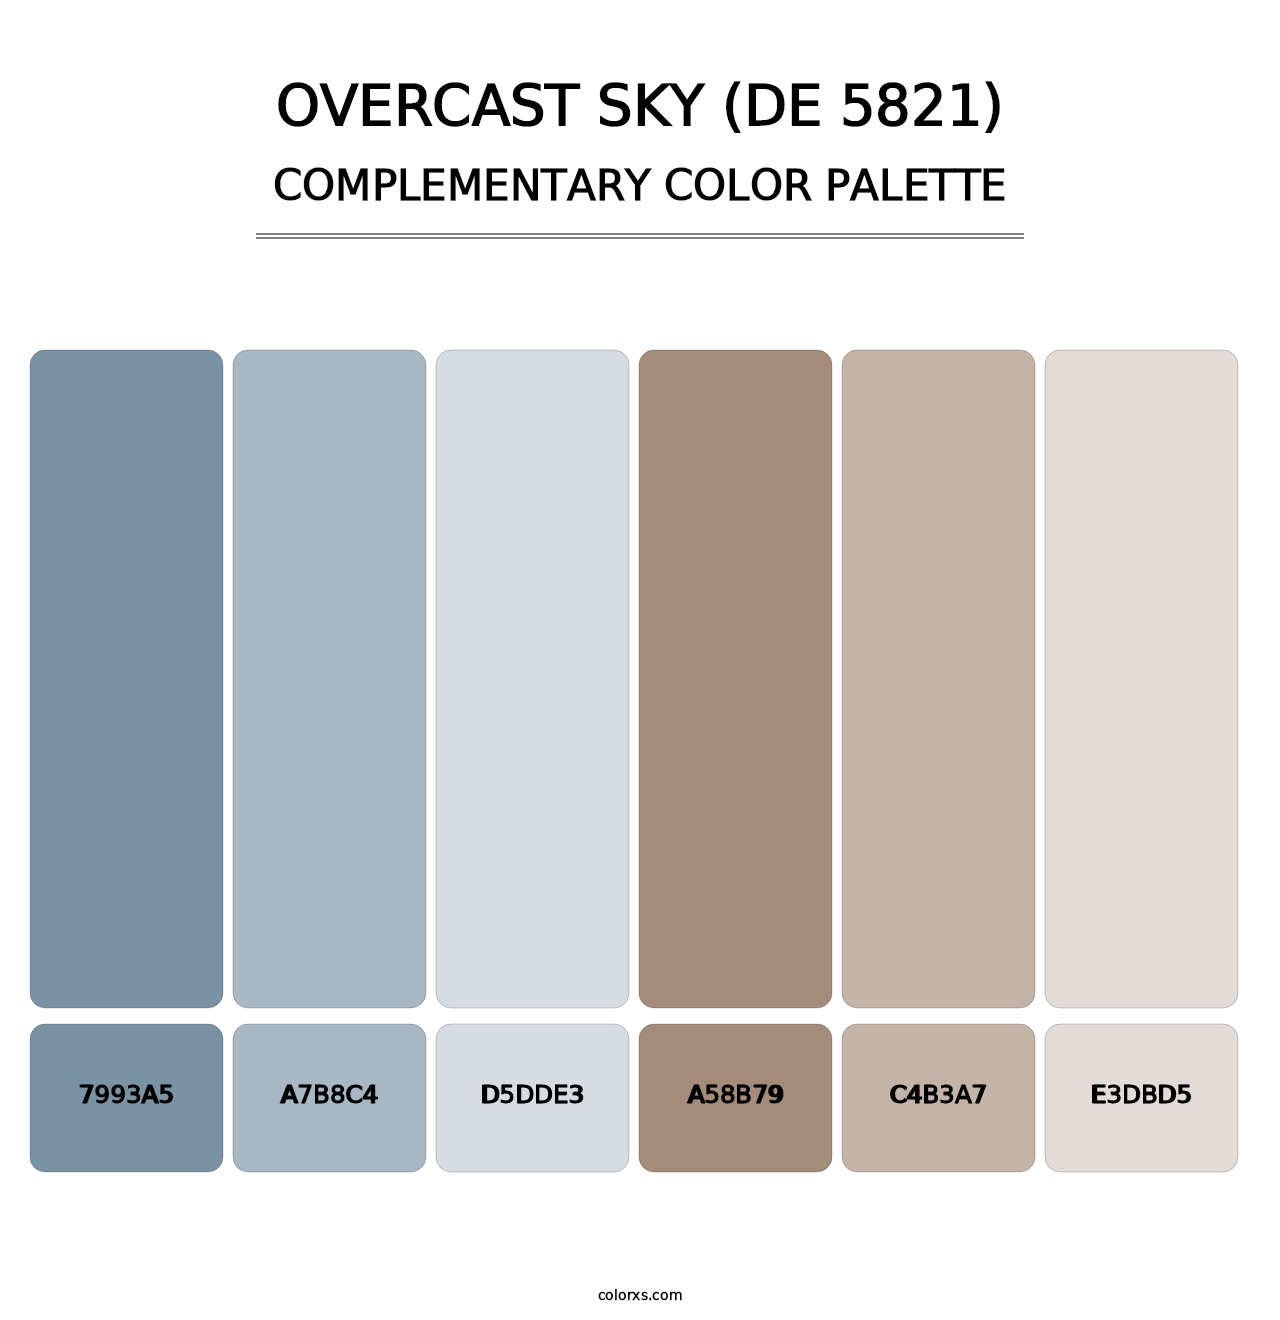 Overcast Sky (DE 5821) - Complementary Color Palette